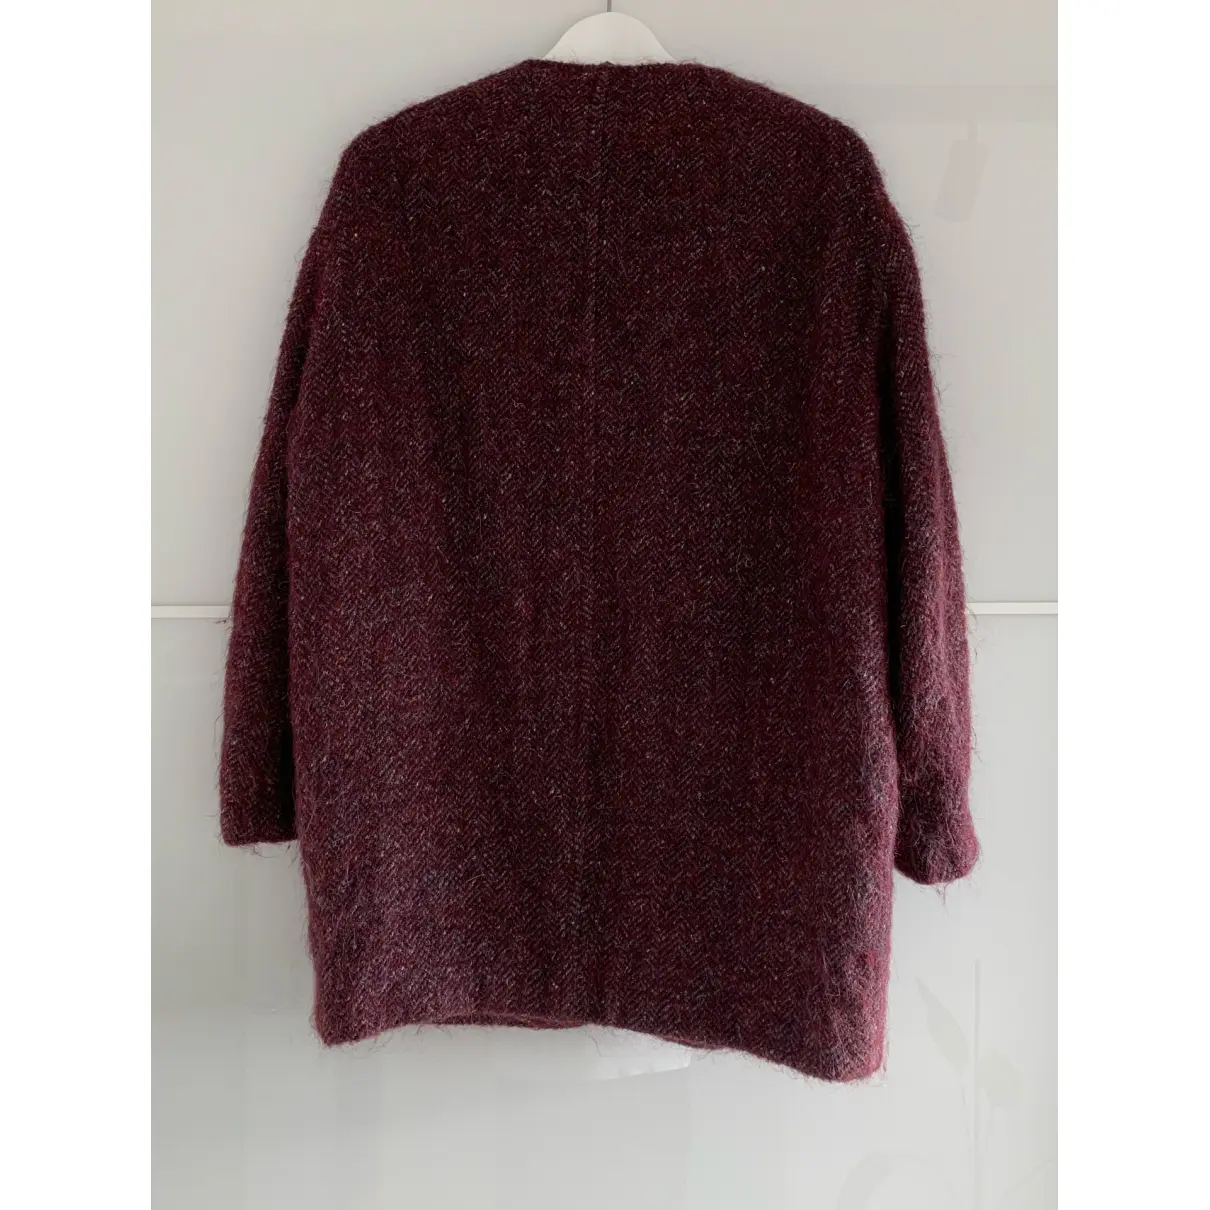 Buy Isabel Marant Etoile Wool peacoat online